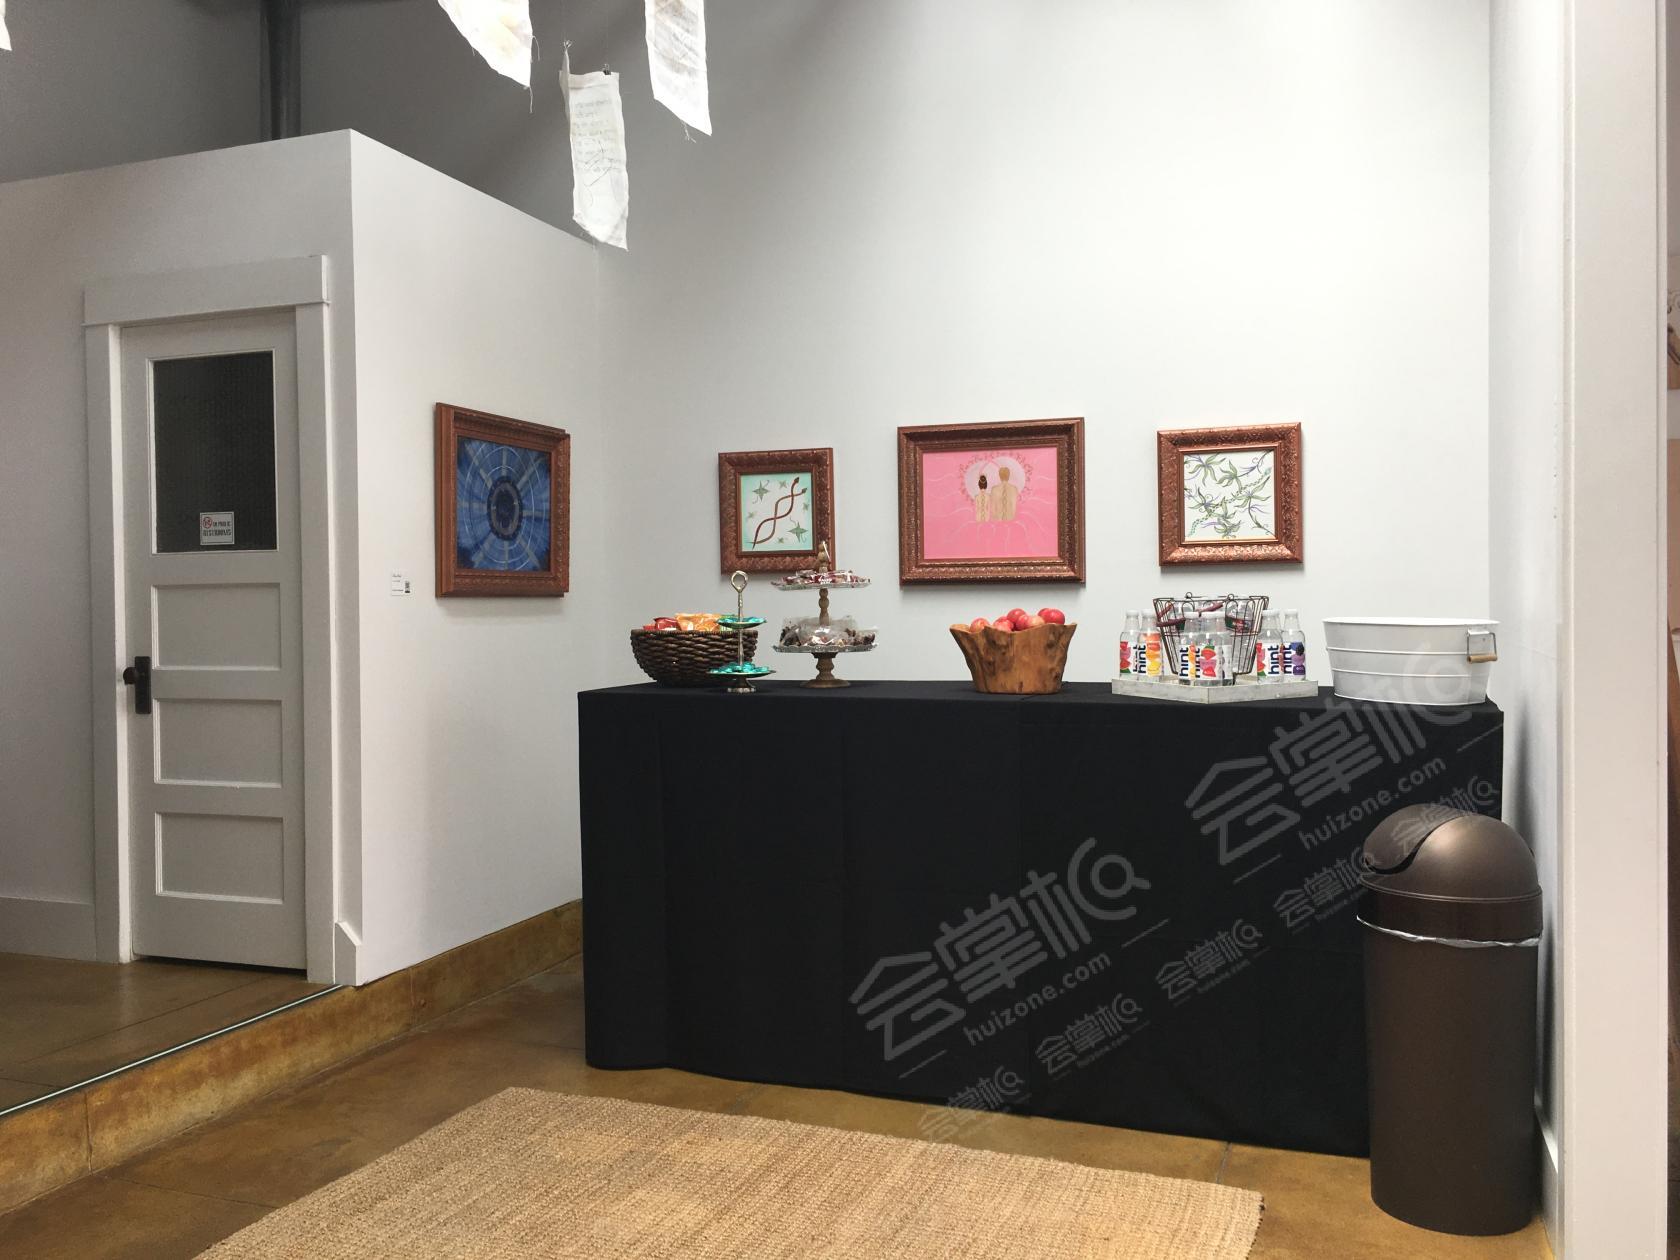 Art Gallery-Pop-up Retail